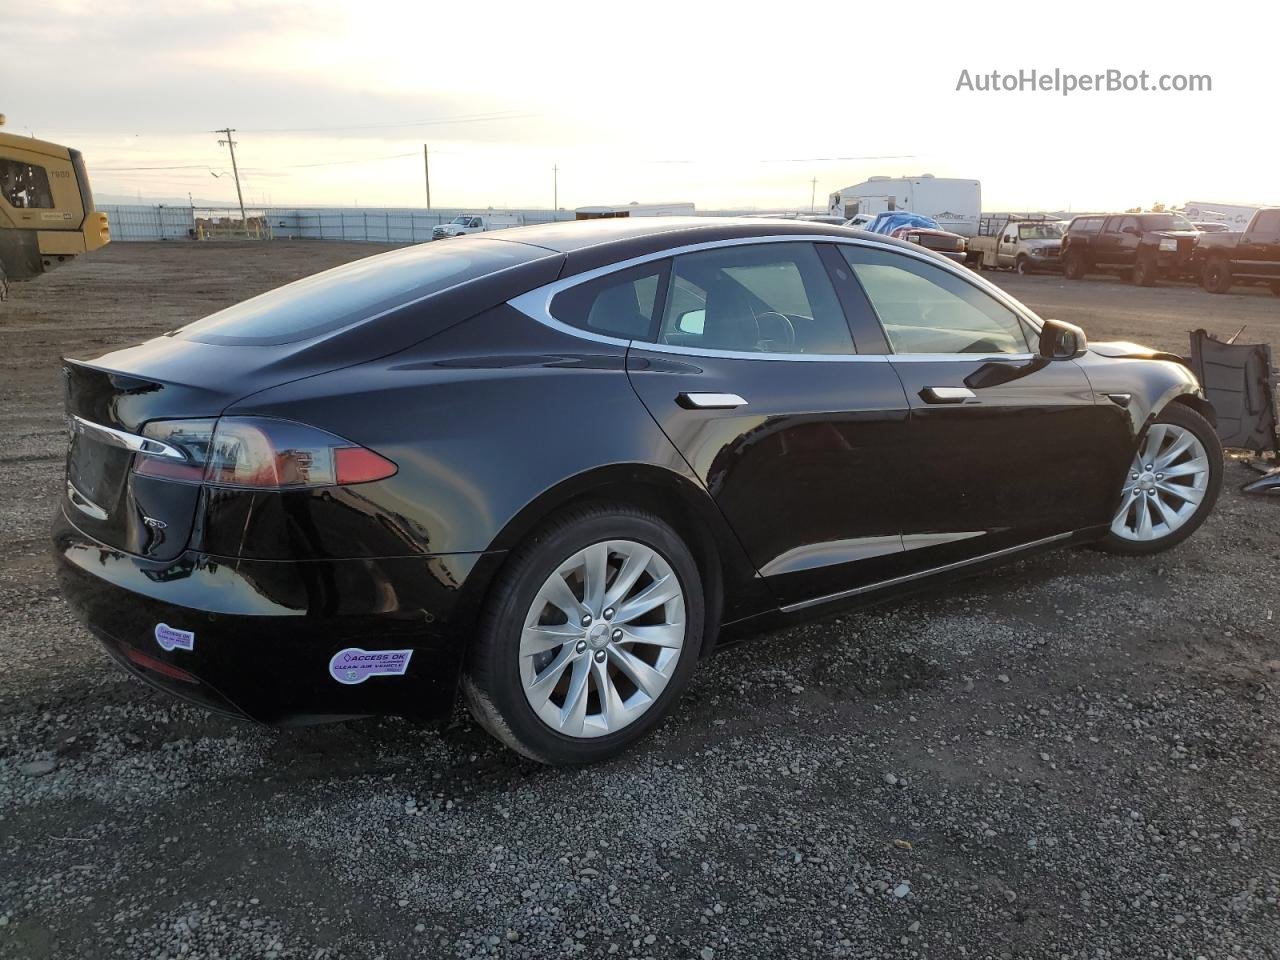 2018 Tesla Model S  Black vin: 5YJSA1E25JF297680